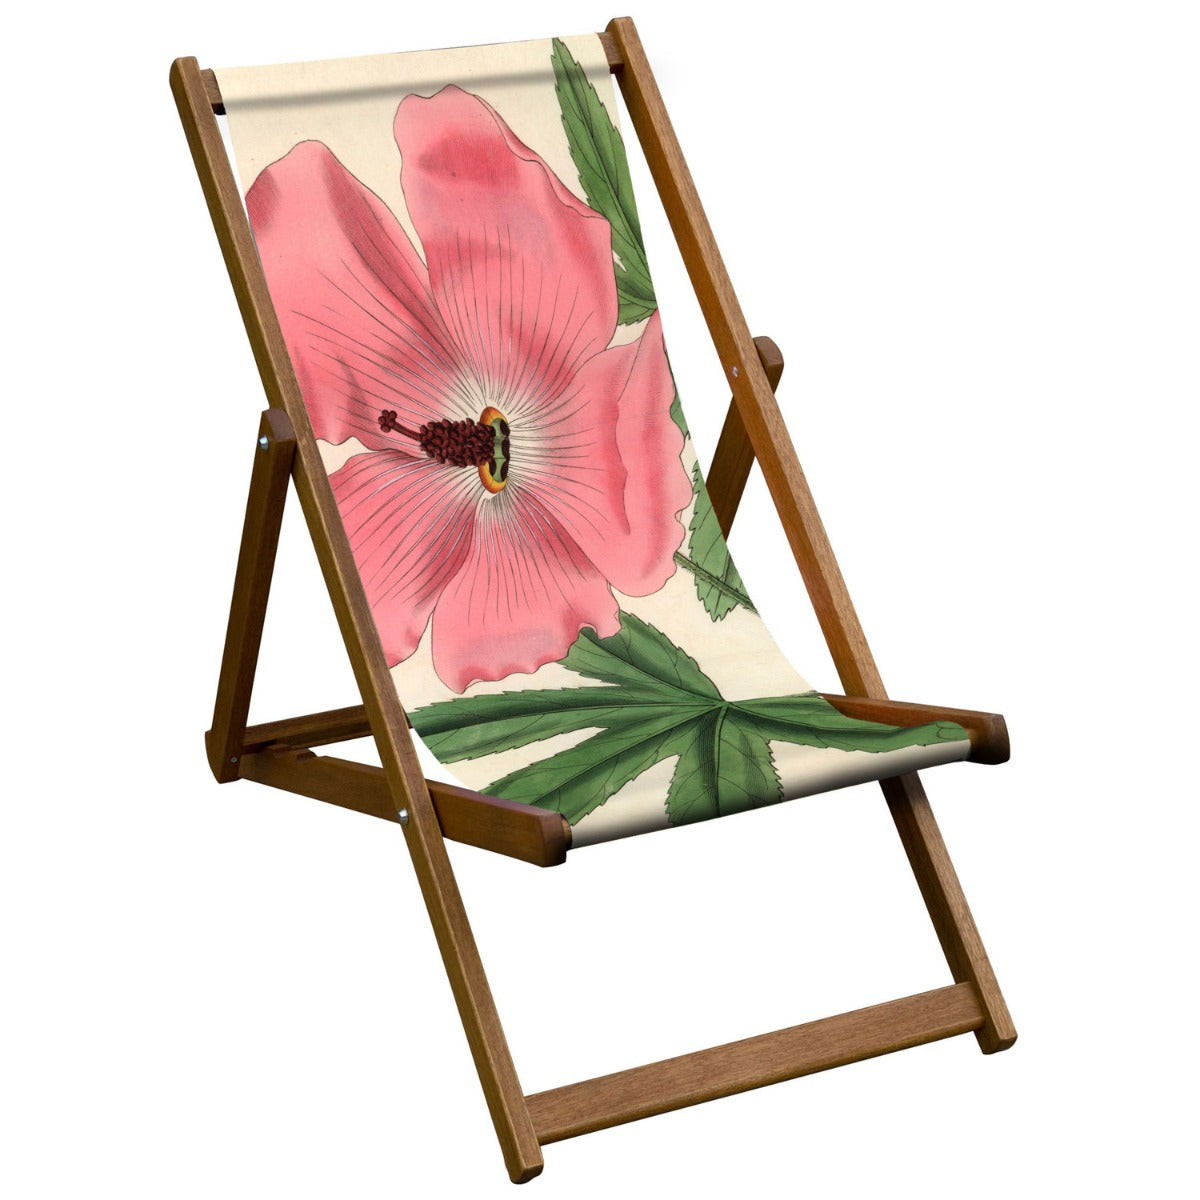 Vintage Inspired Wooden Deckchair with Splendid Hibiscus Botanical Design